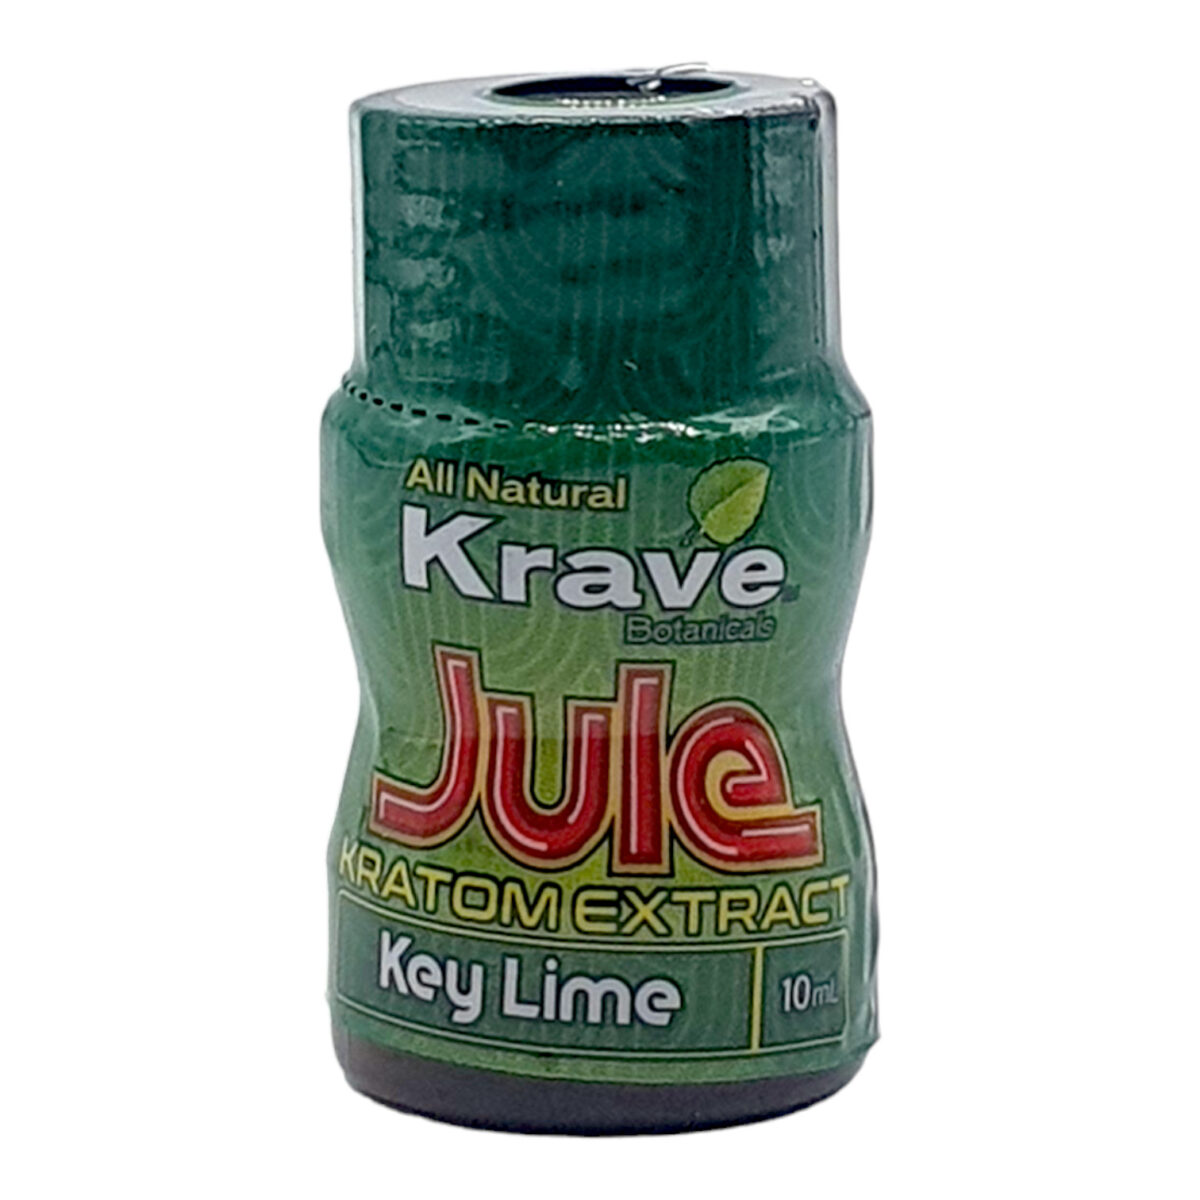 Krave Jule Kratom Extract Shot Key Lime – 10ml